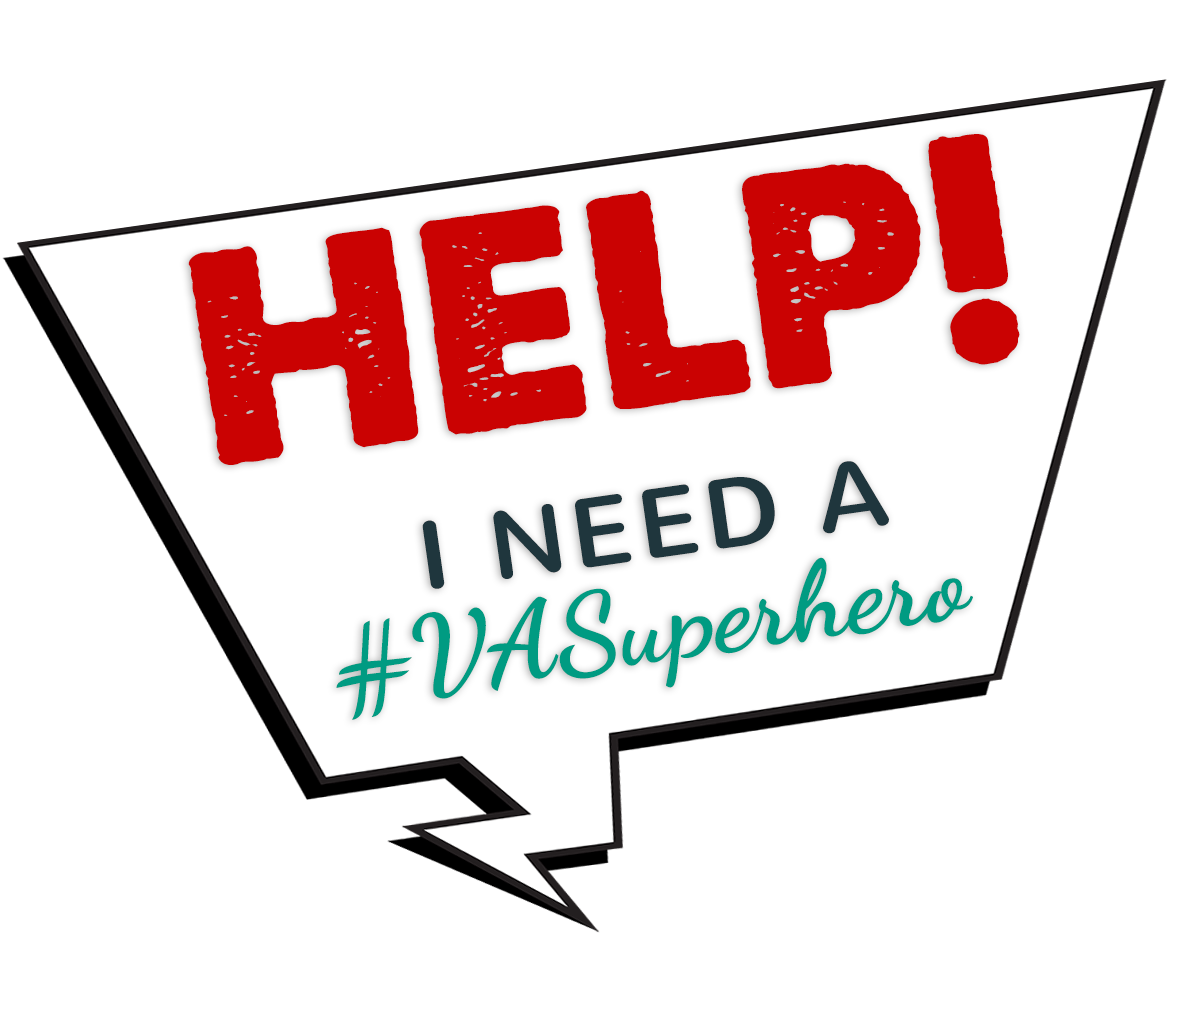 Urgent speech bubble that says "HELP! I need a #VA Superhero